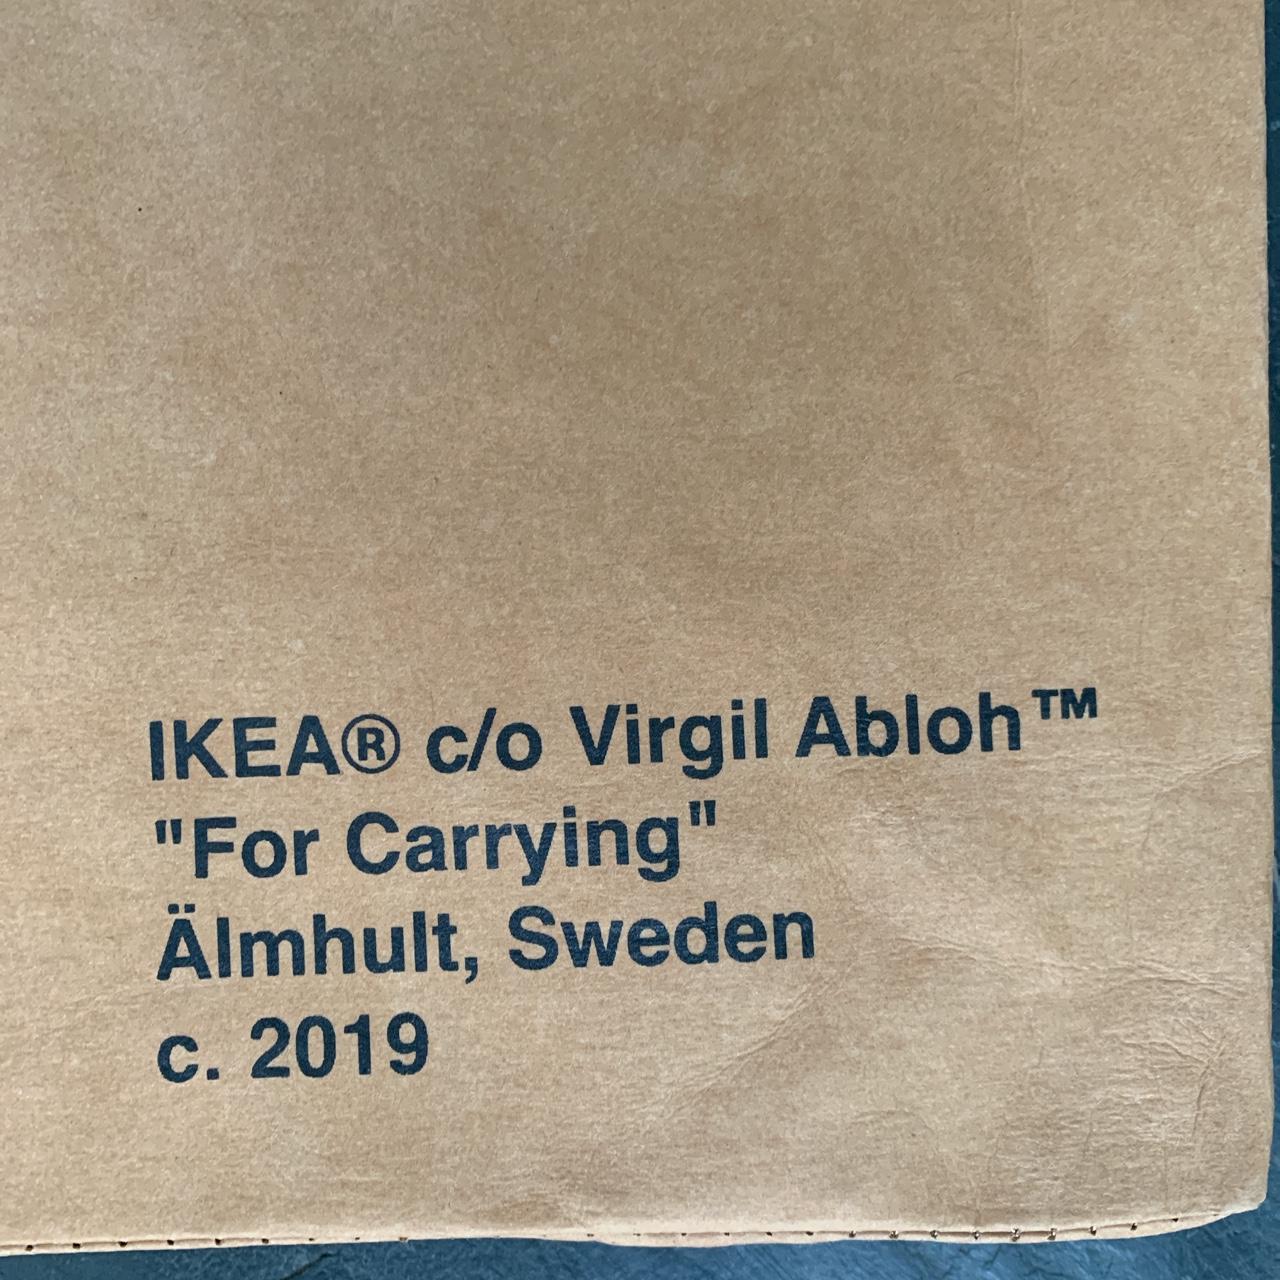 IKEA X VIRGIL ABLOH OFF WHITE “SCULPTURE” LARGE BAG LIMITED EDITION ART 